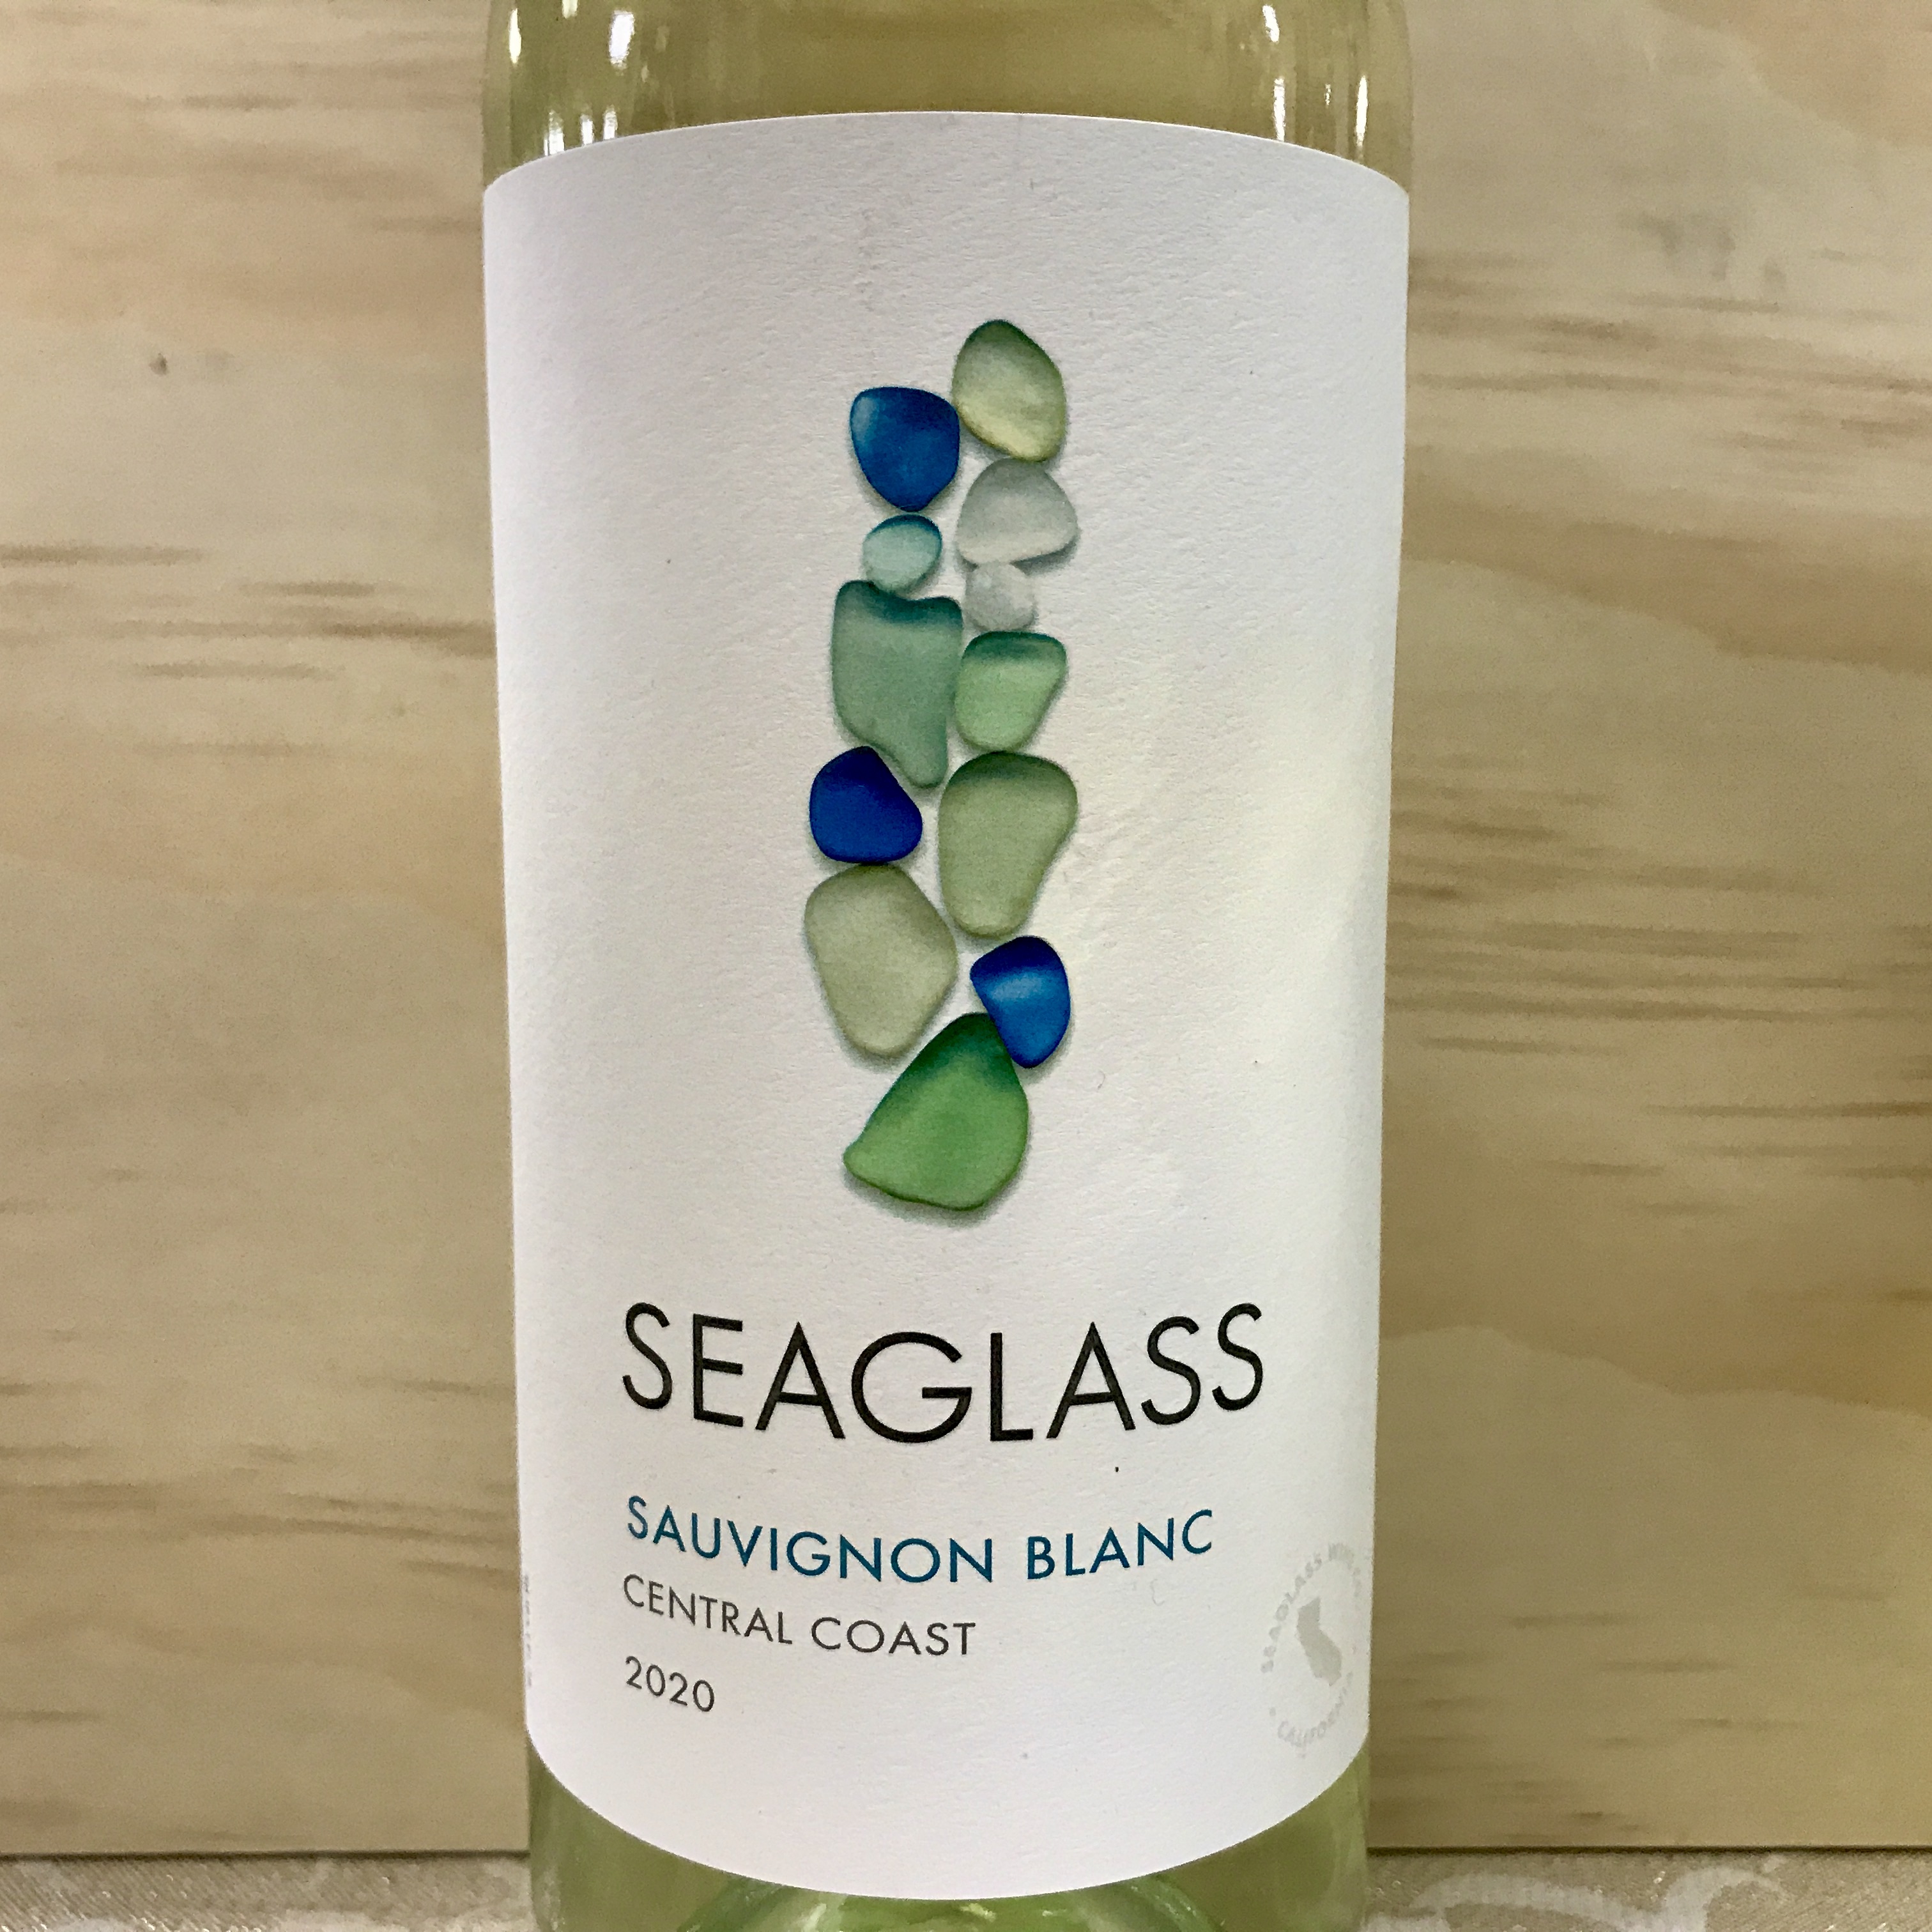 Seaglass Sauvignon Blanc Central Coast 2020